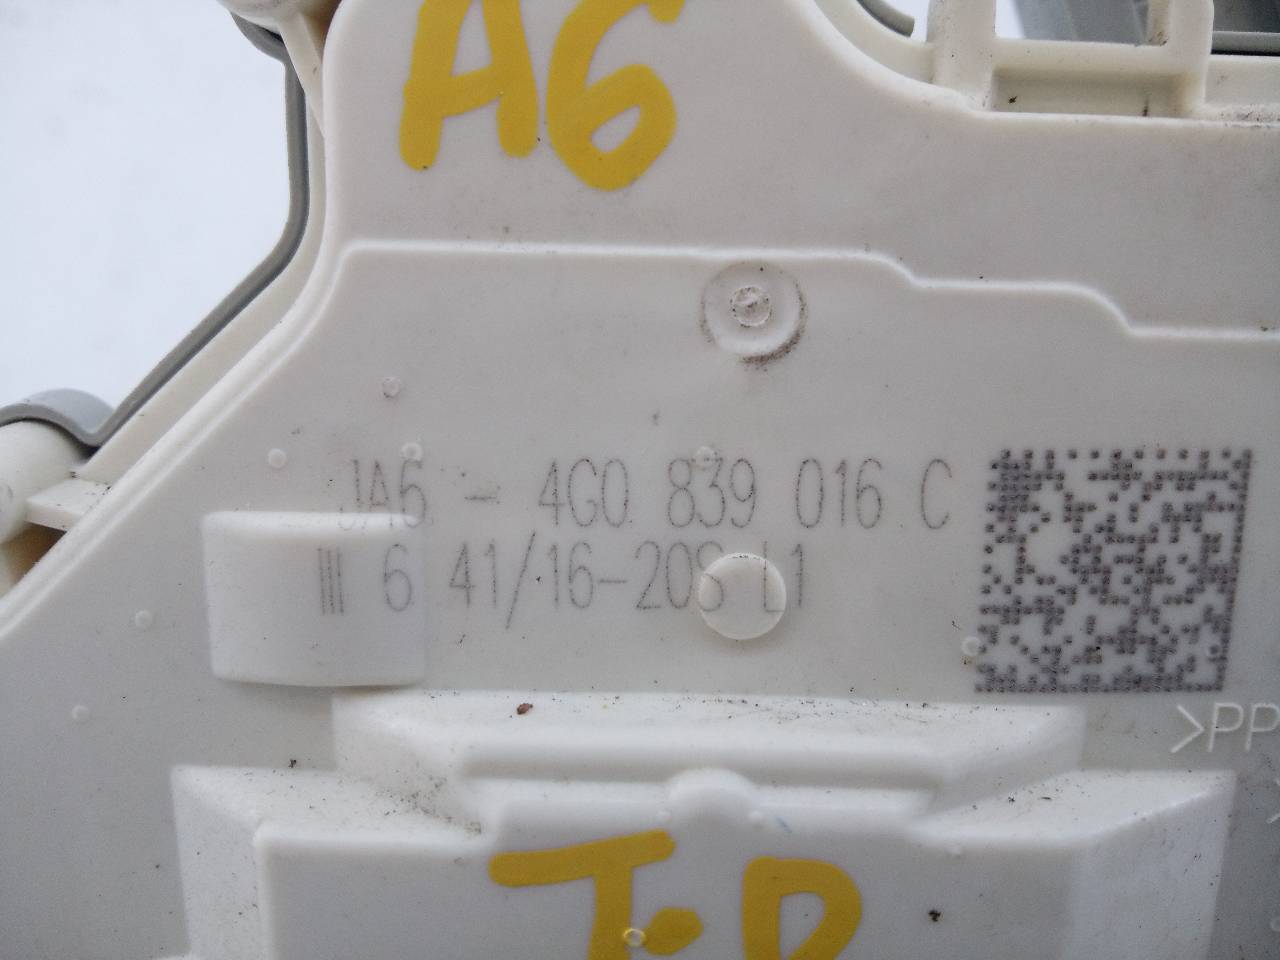 AUDI A7 C7/4G (2010-2020) Rear Right Door Lock 4G0839016C, E1-A5-32-2 23298441